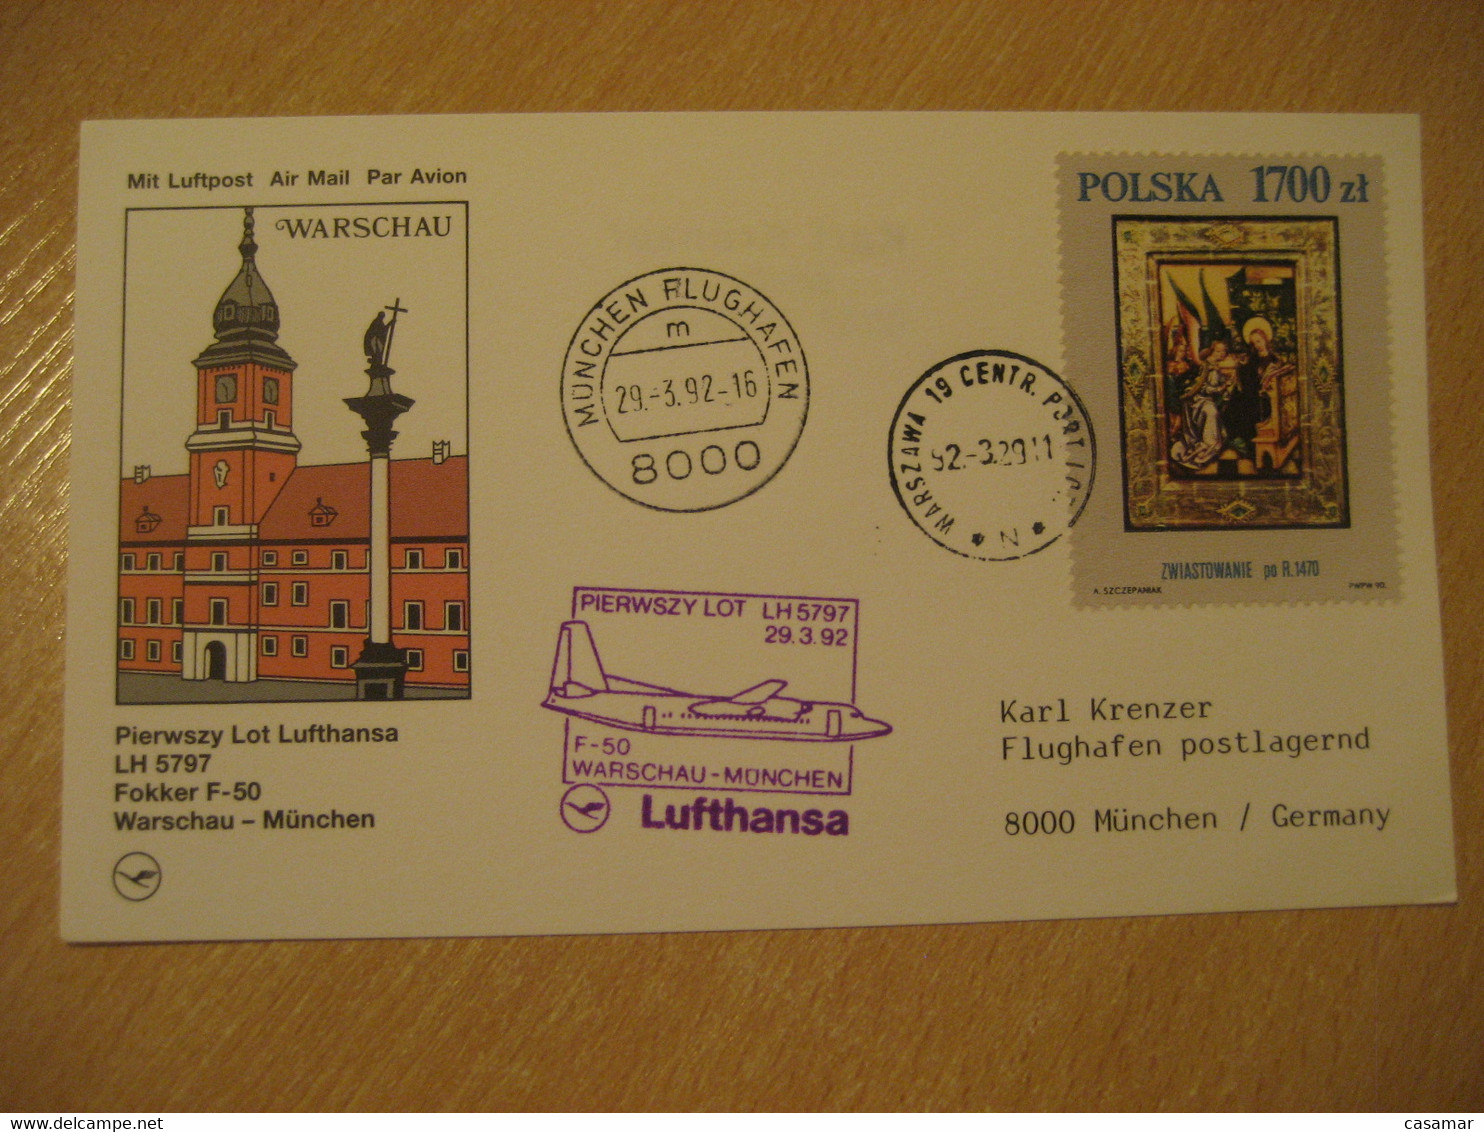 WARSZAWA Warsaw Munich 1992 Lufthansa Airlines Airline Fokker F-50 First Flight Violet Cancel Card POLAND GERMANY - Airplanes